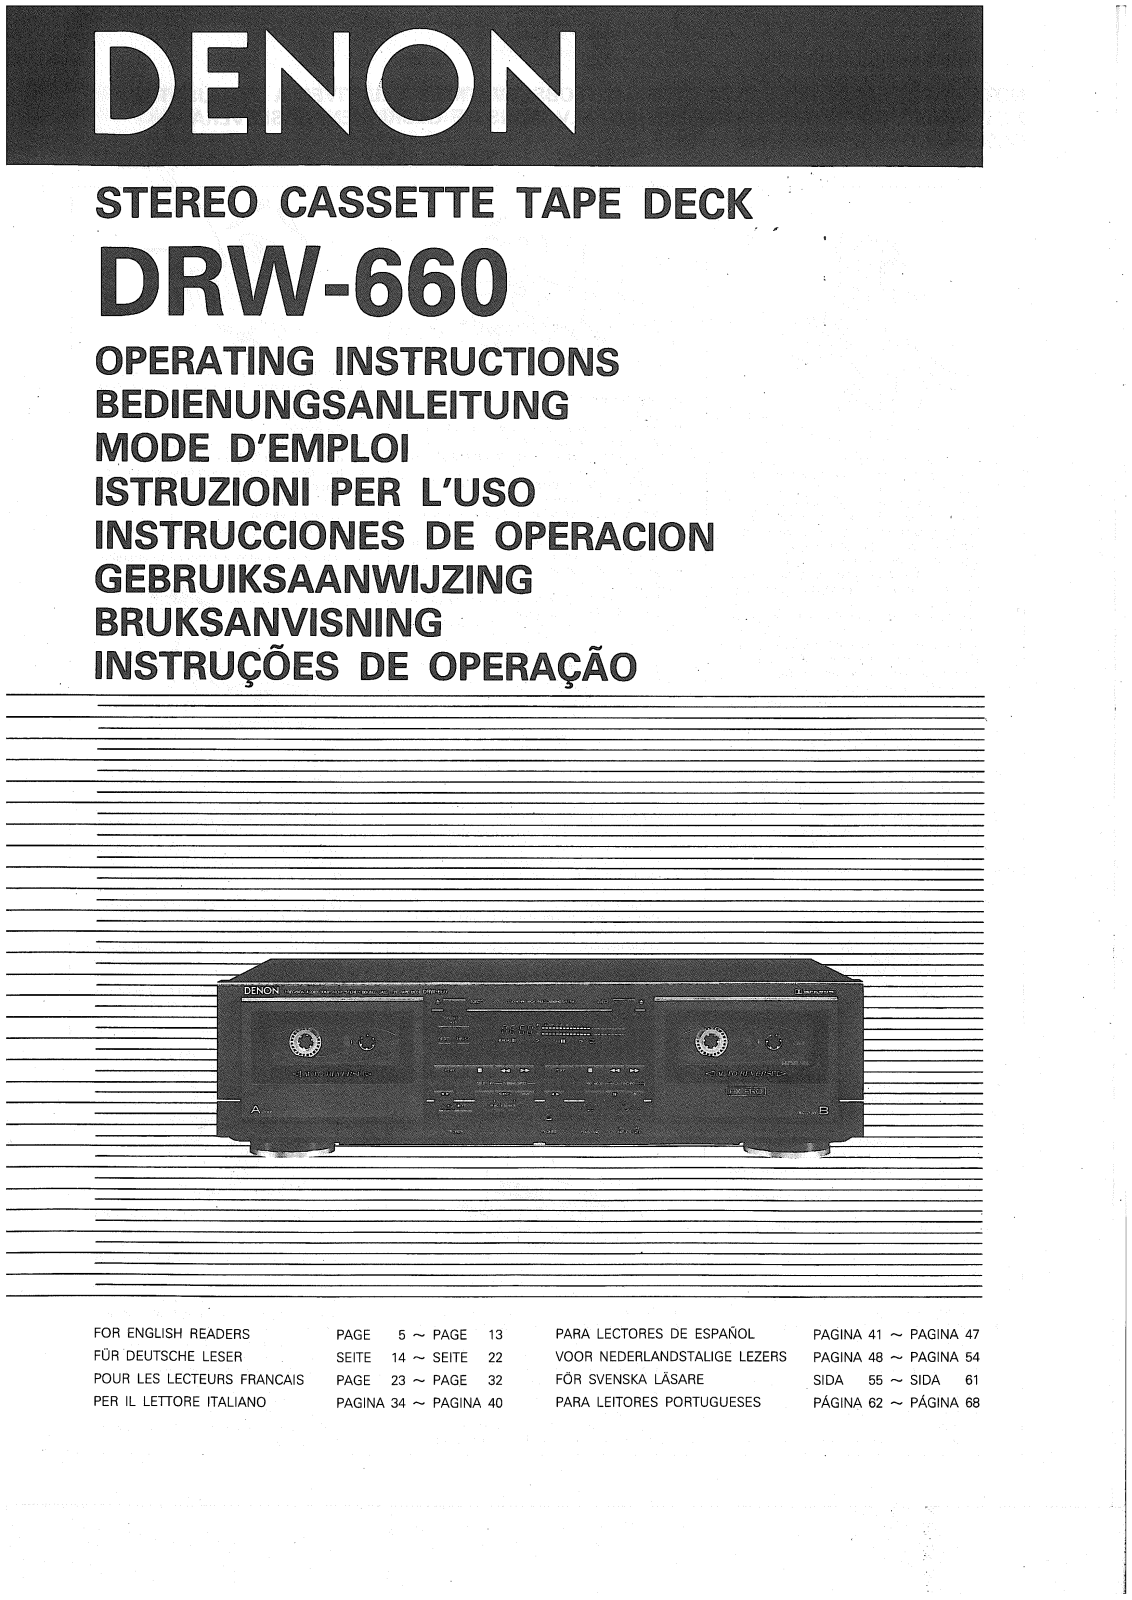 Denon DRW-660 Owner's Manual